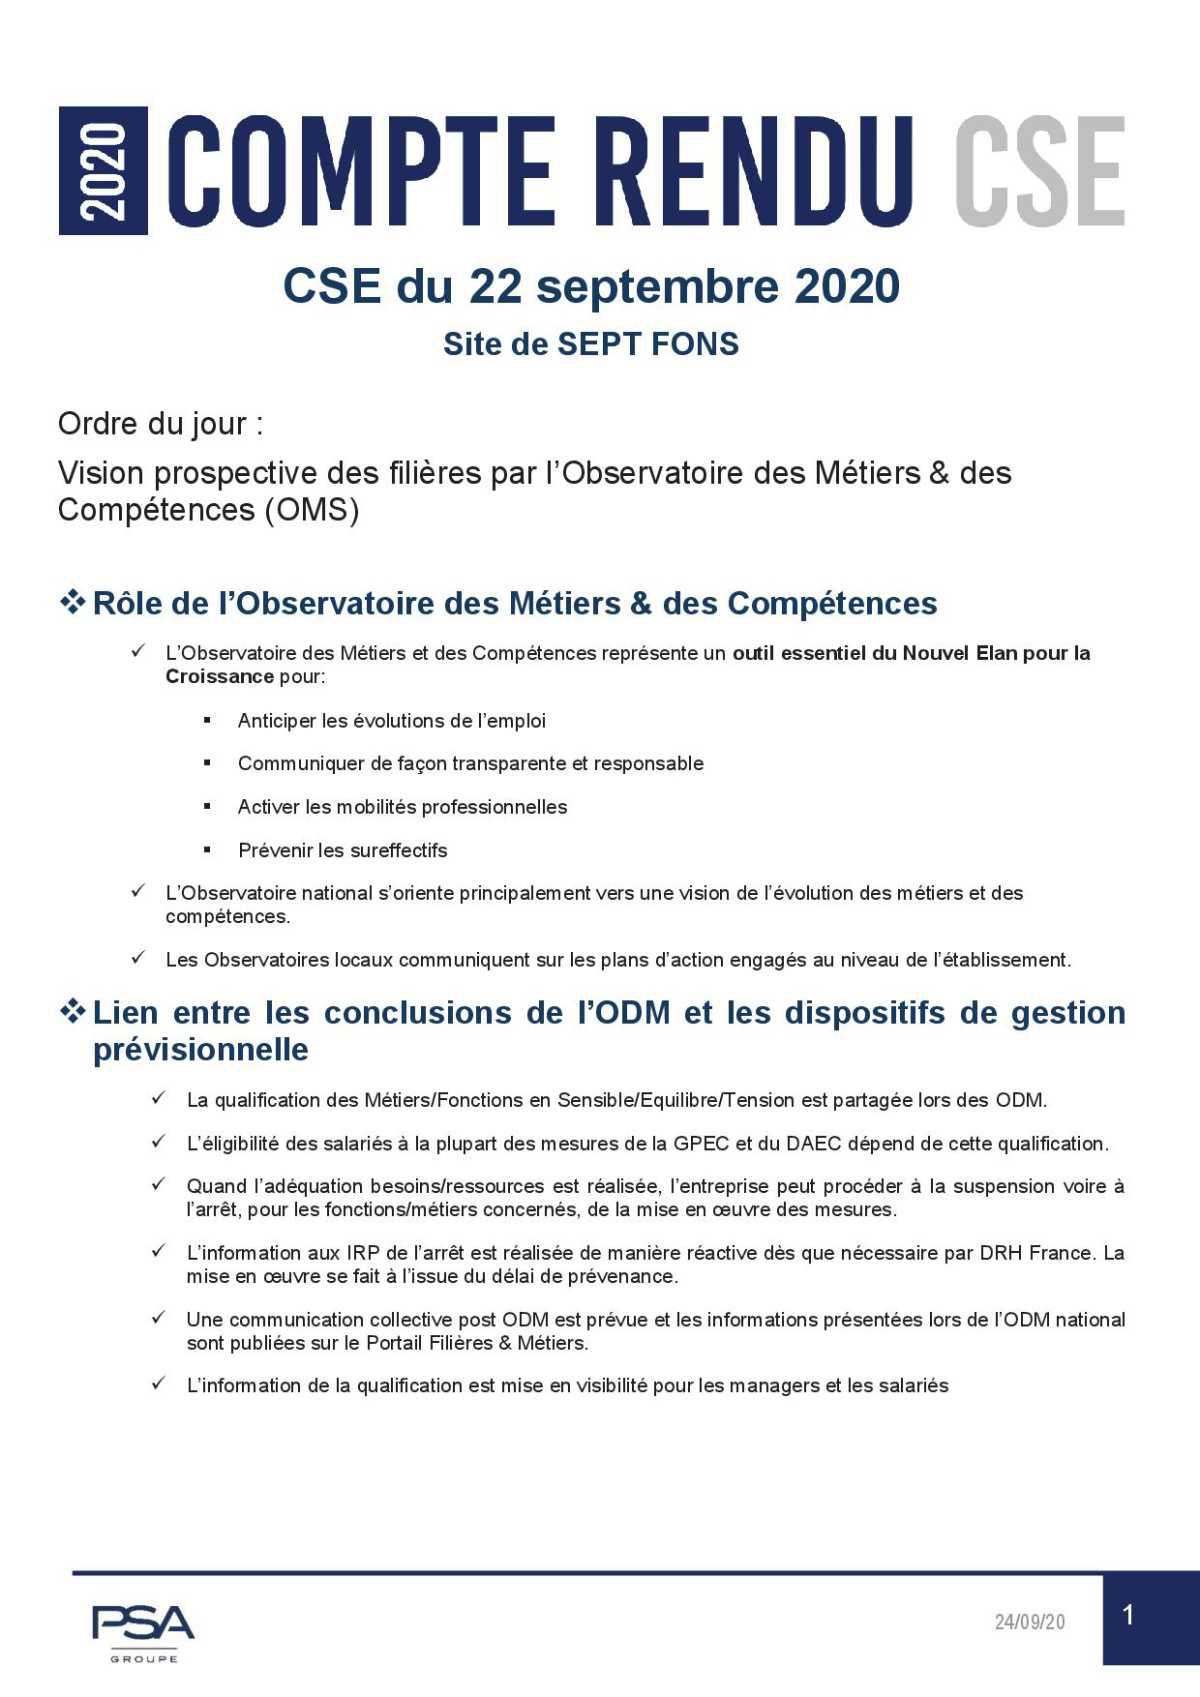 Compte Rendu CSE extra 24 septembre 2020